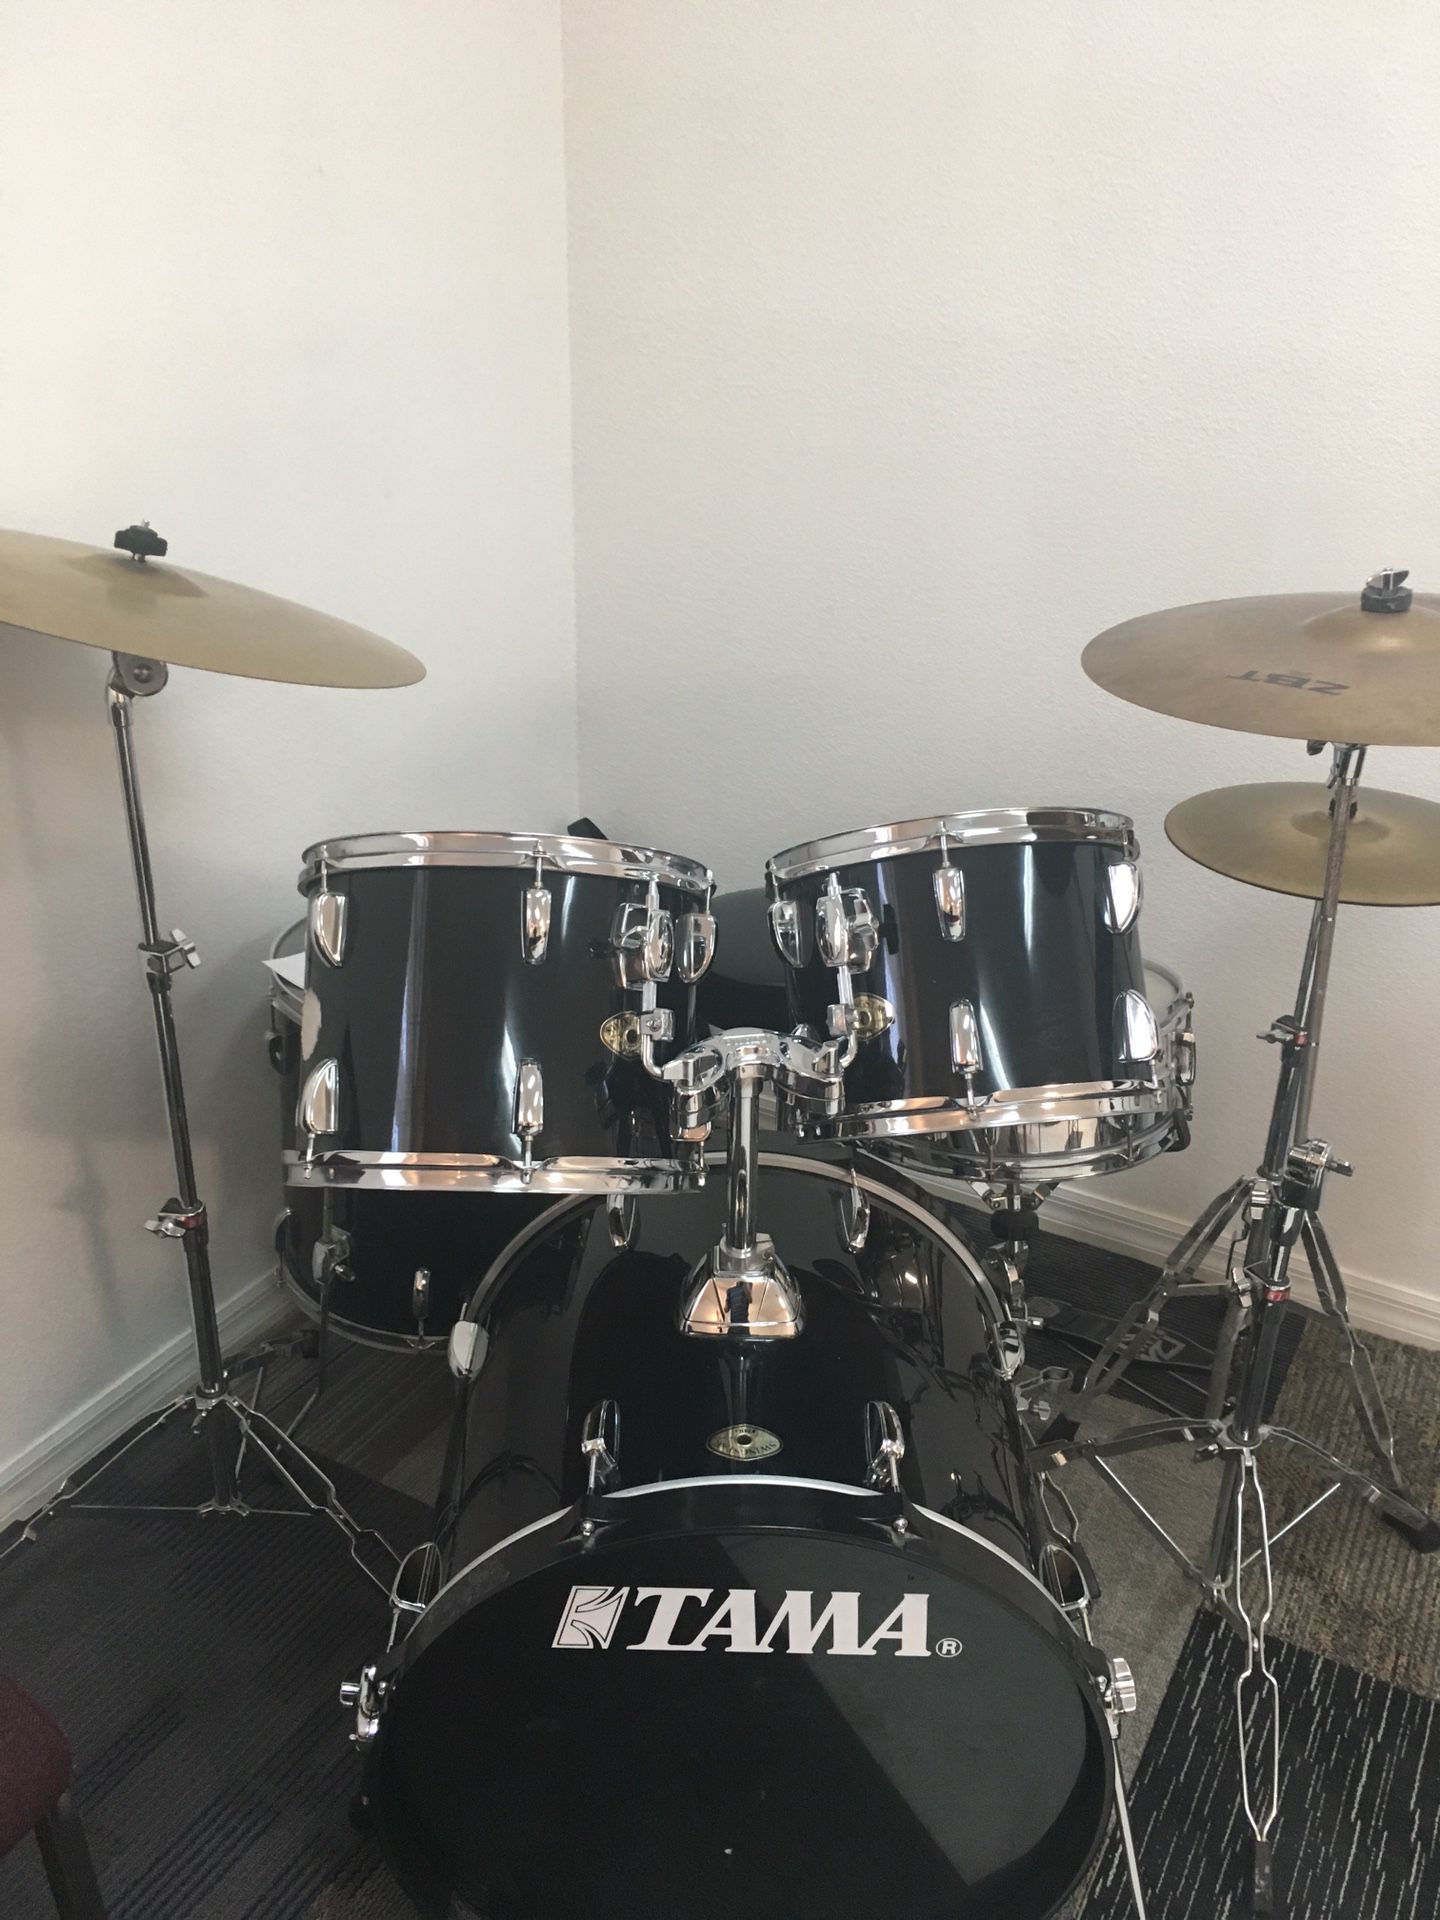 TAMA drum set